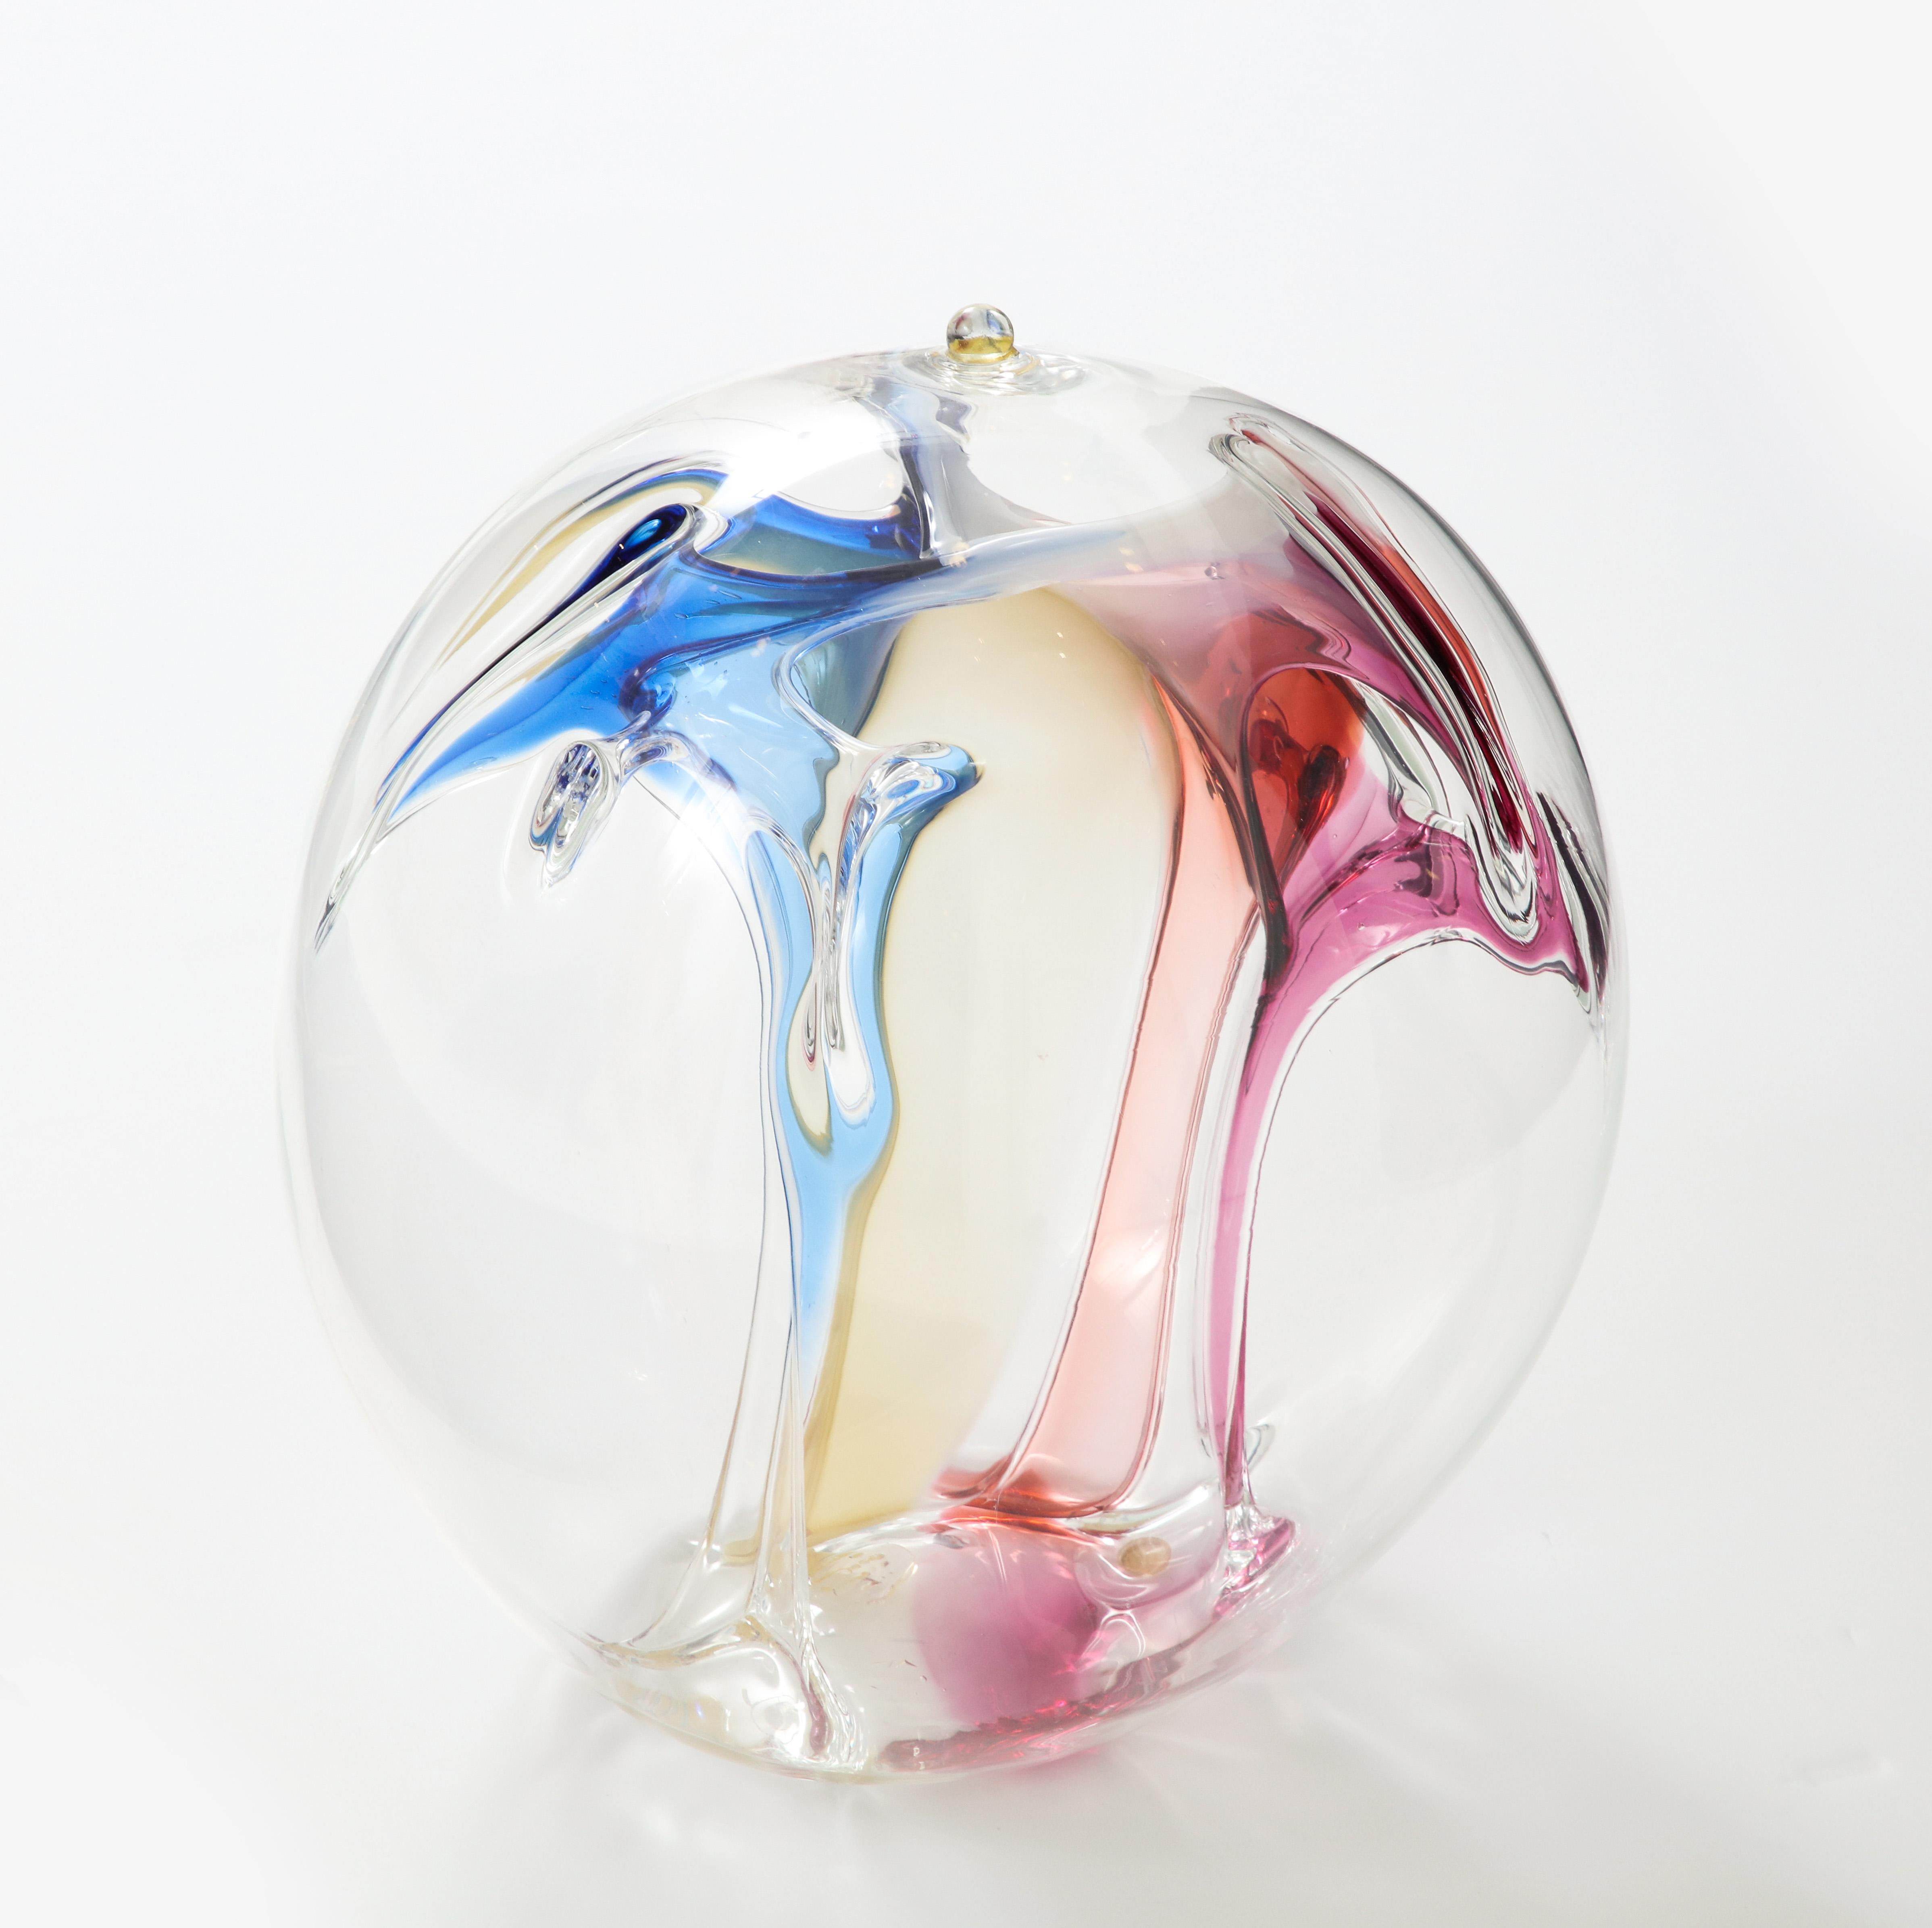 American Stunning Peter Bramhall Glass Orb Sculpture For Sale